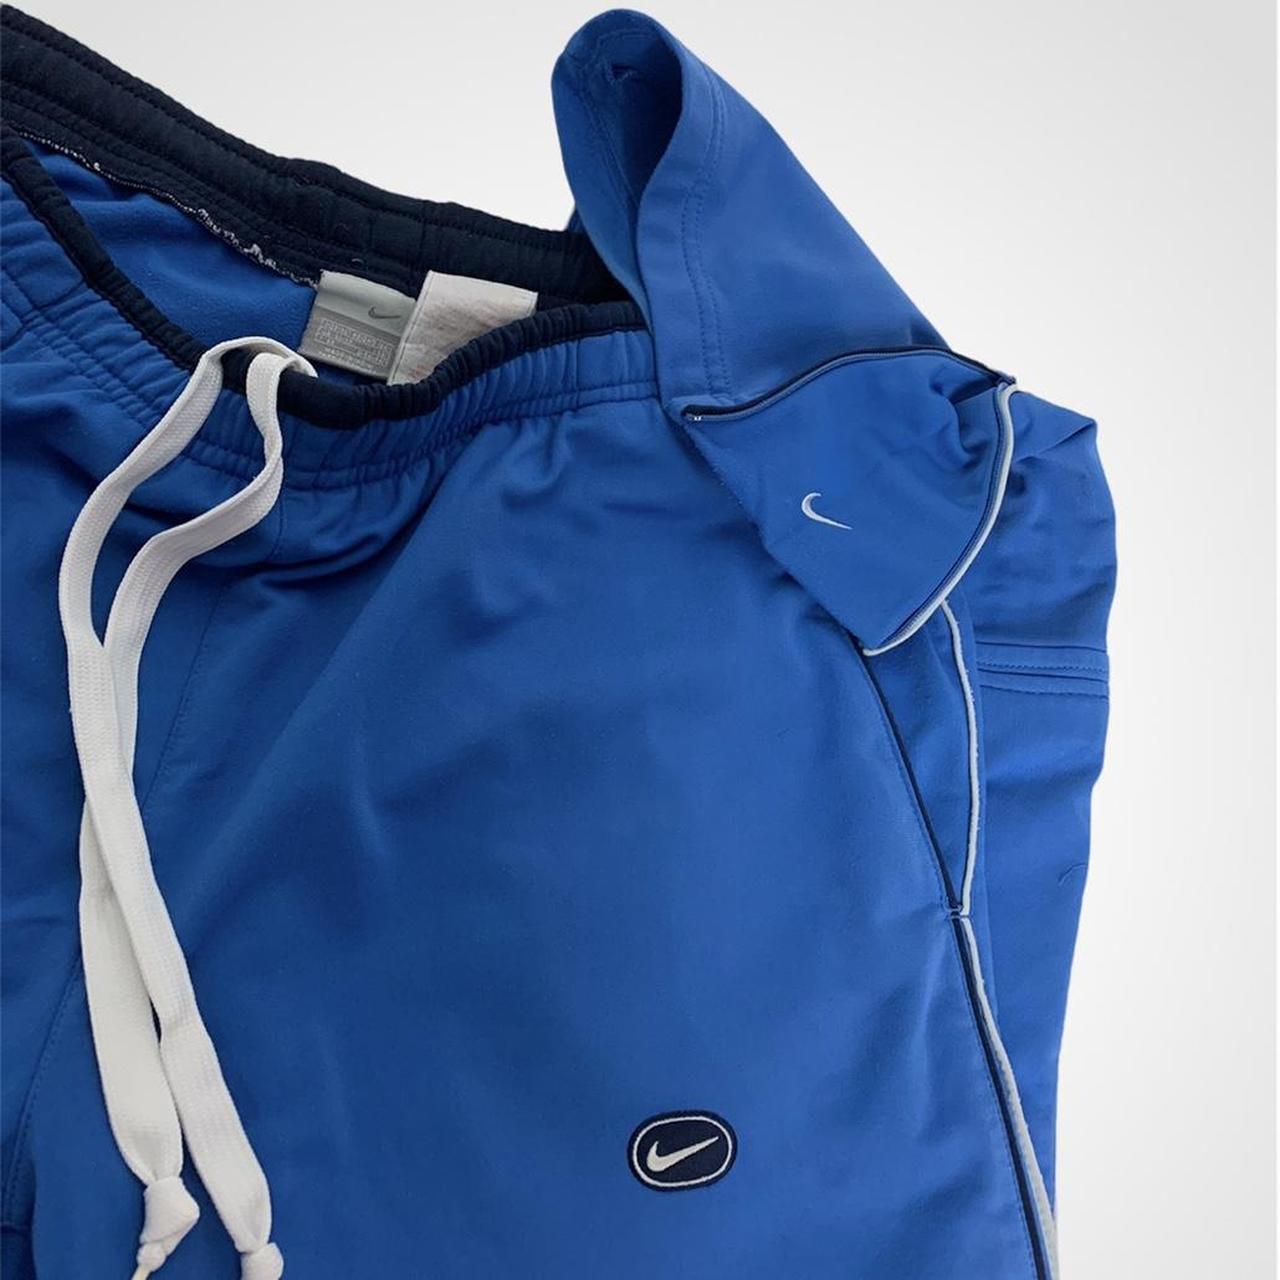 Nike vintage unisex y2k adjustable baggy blue track pants